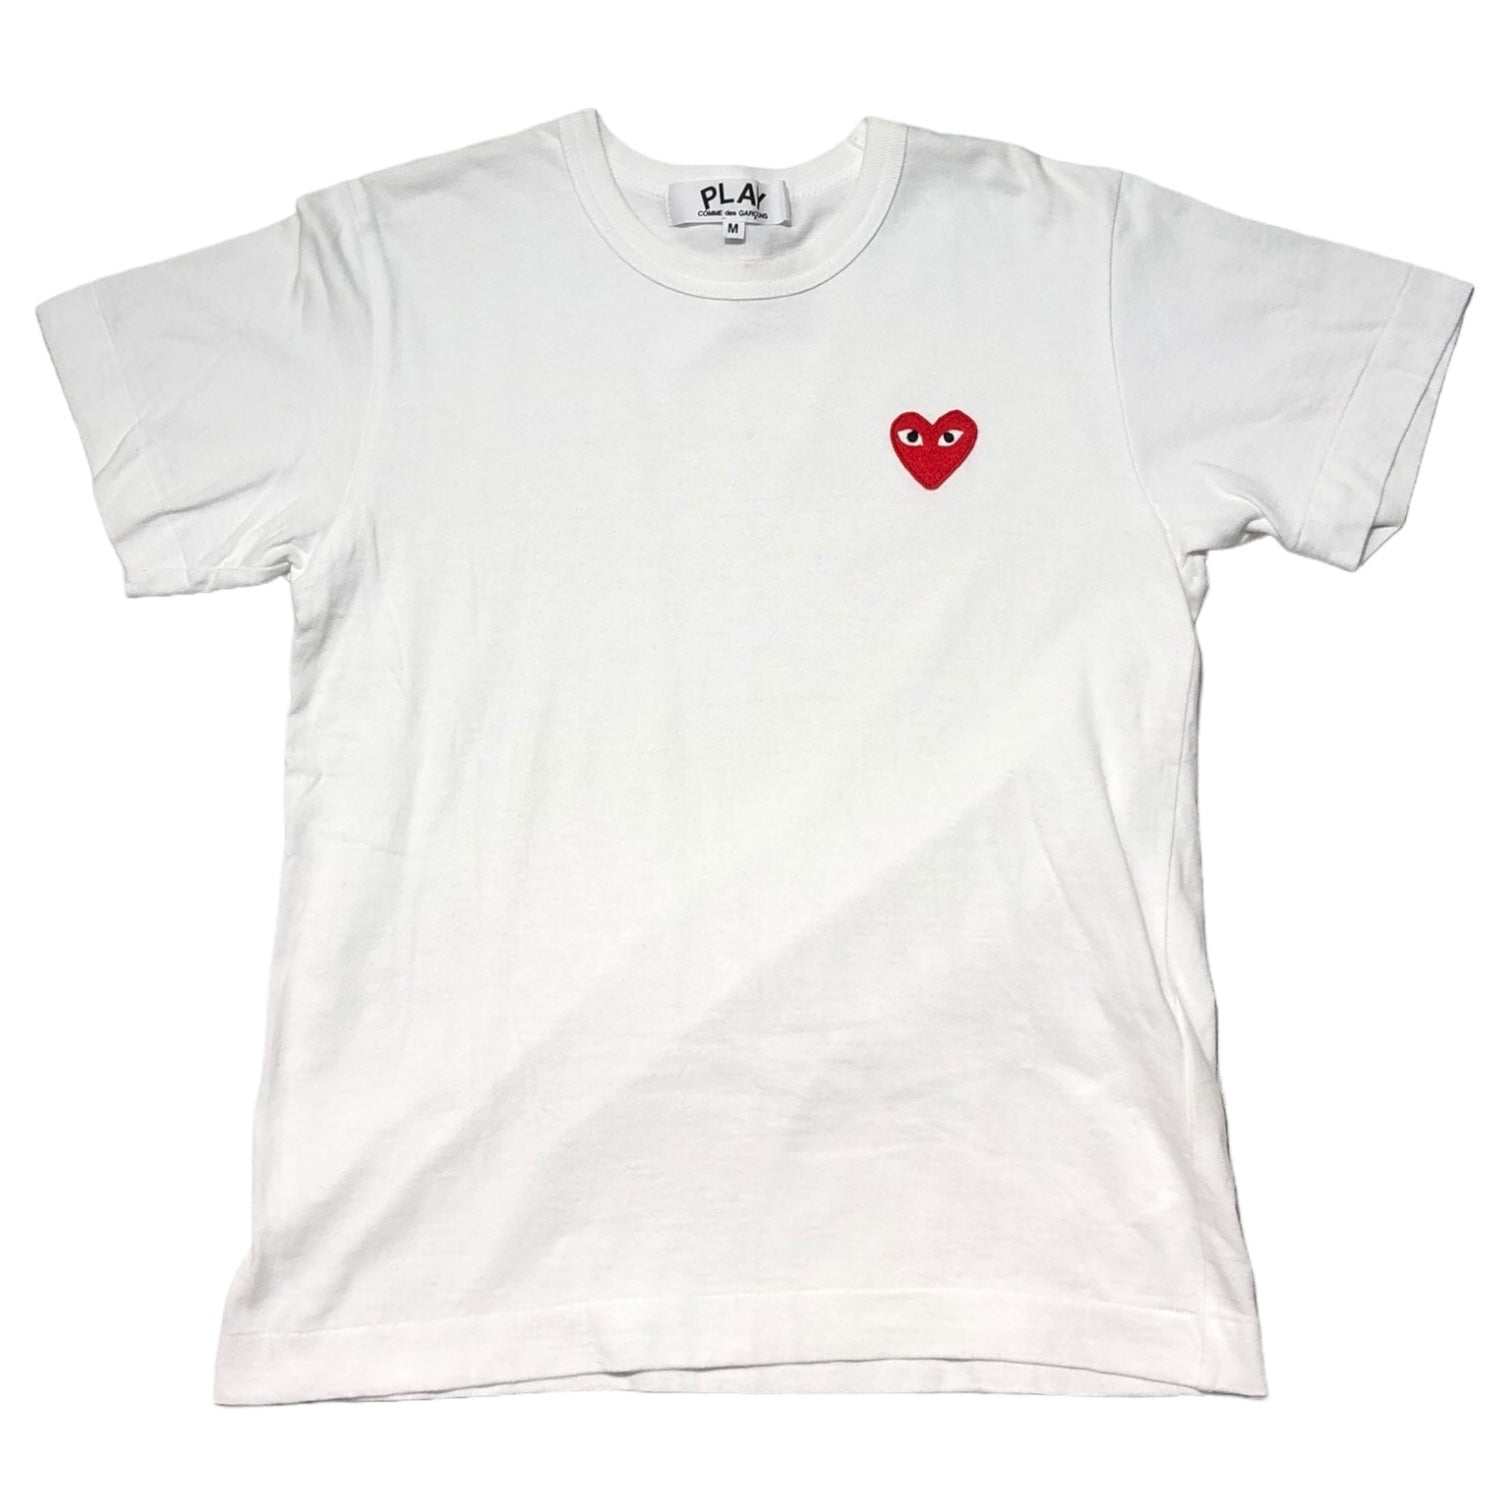 PLAY COMME des GARCONS(プレイコムデギャルソン) Embroidered heart T-Shirt ハート Tシャツ AZ-T107 M ホワイト